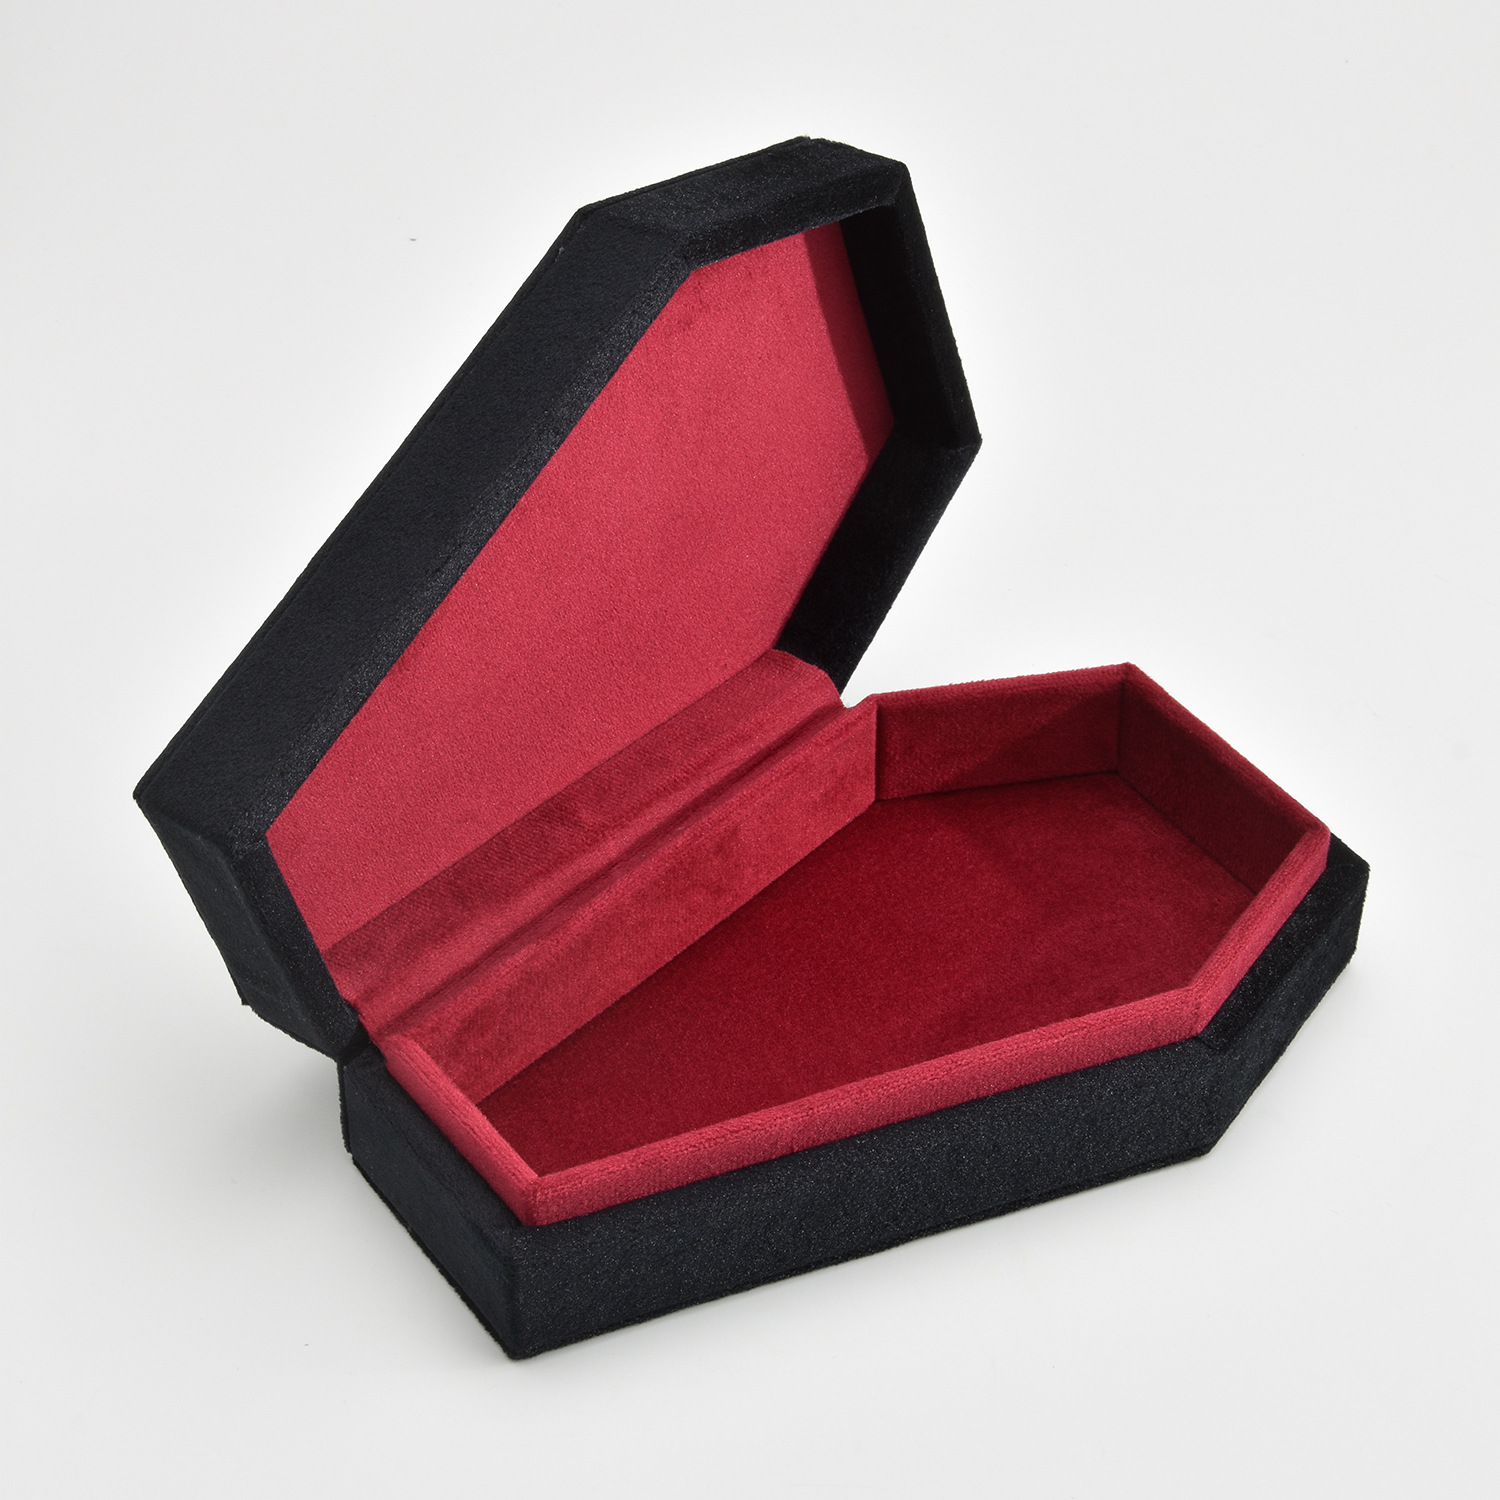 G90) velvet casket-shaped (flip-top hollow) case